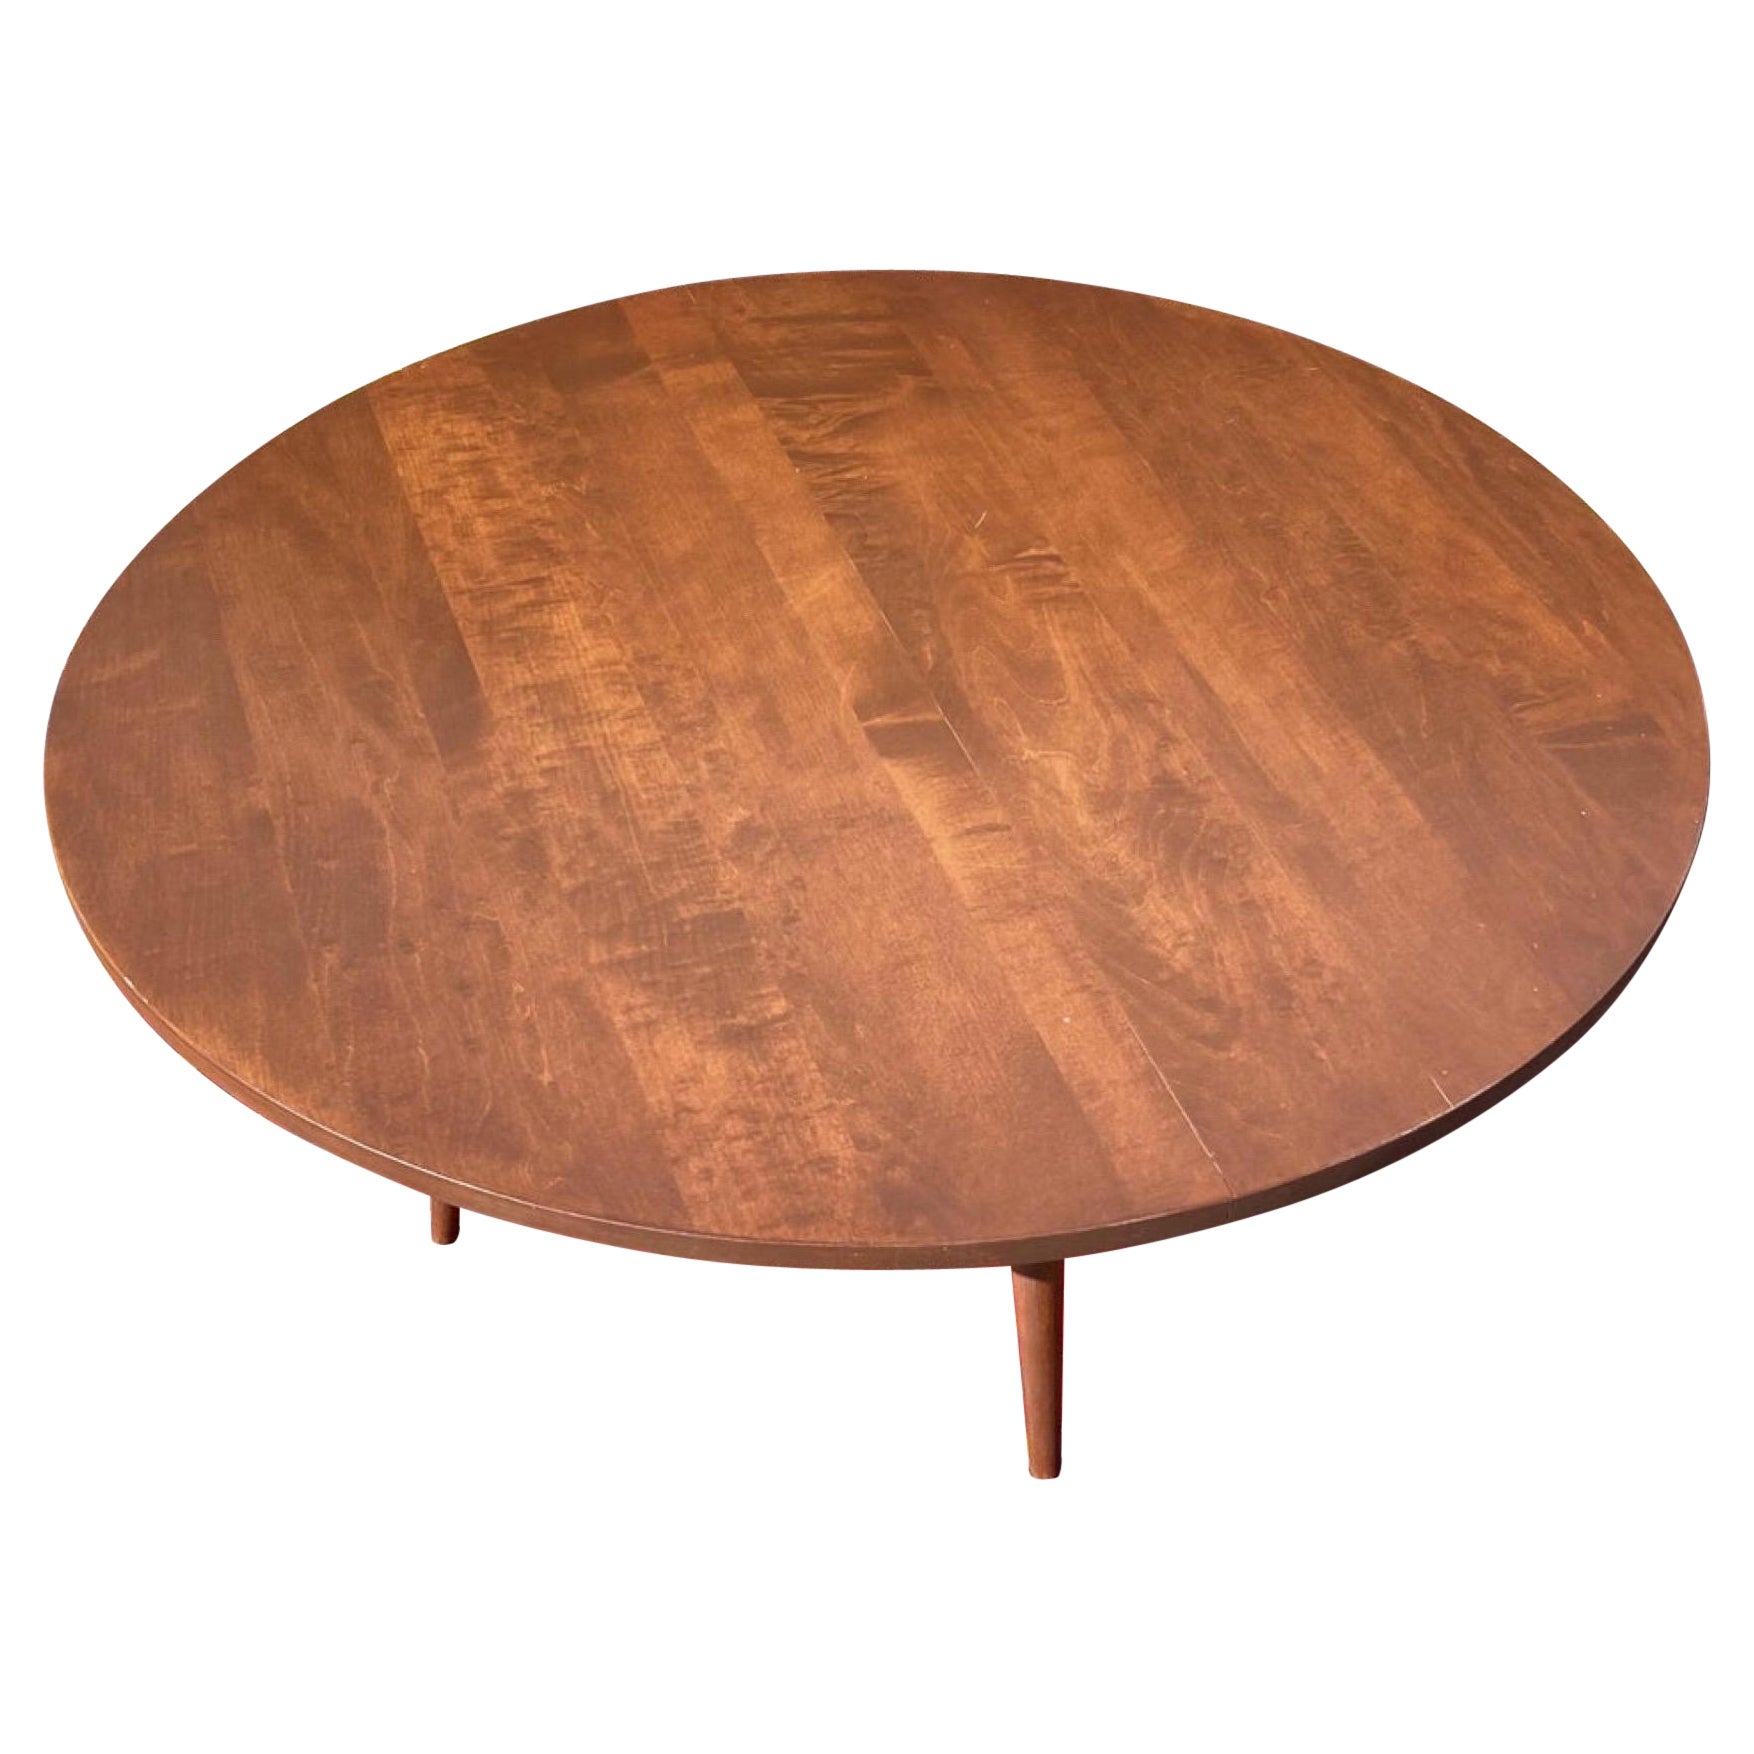 1950’s Paul McCobb Round Coffee Table